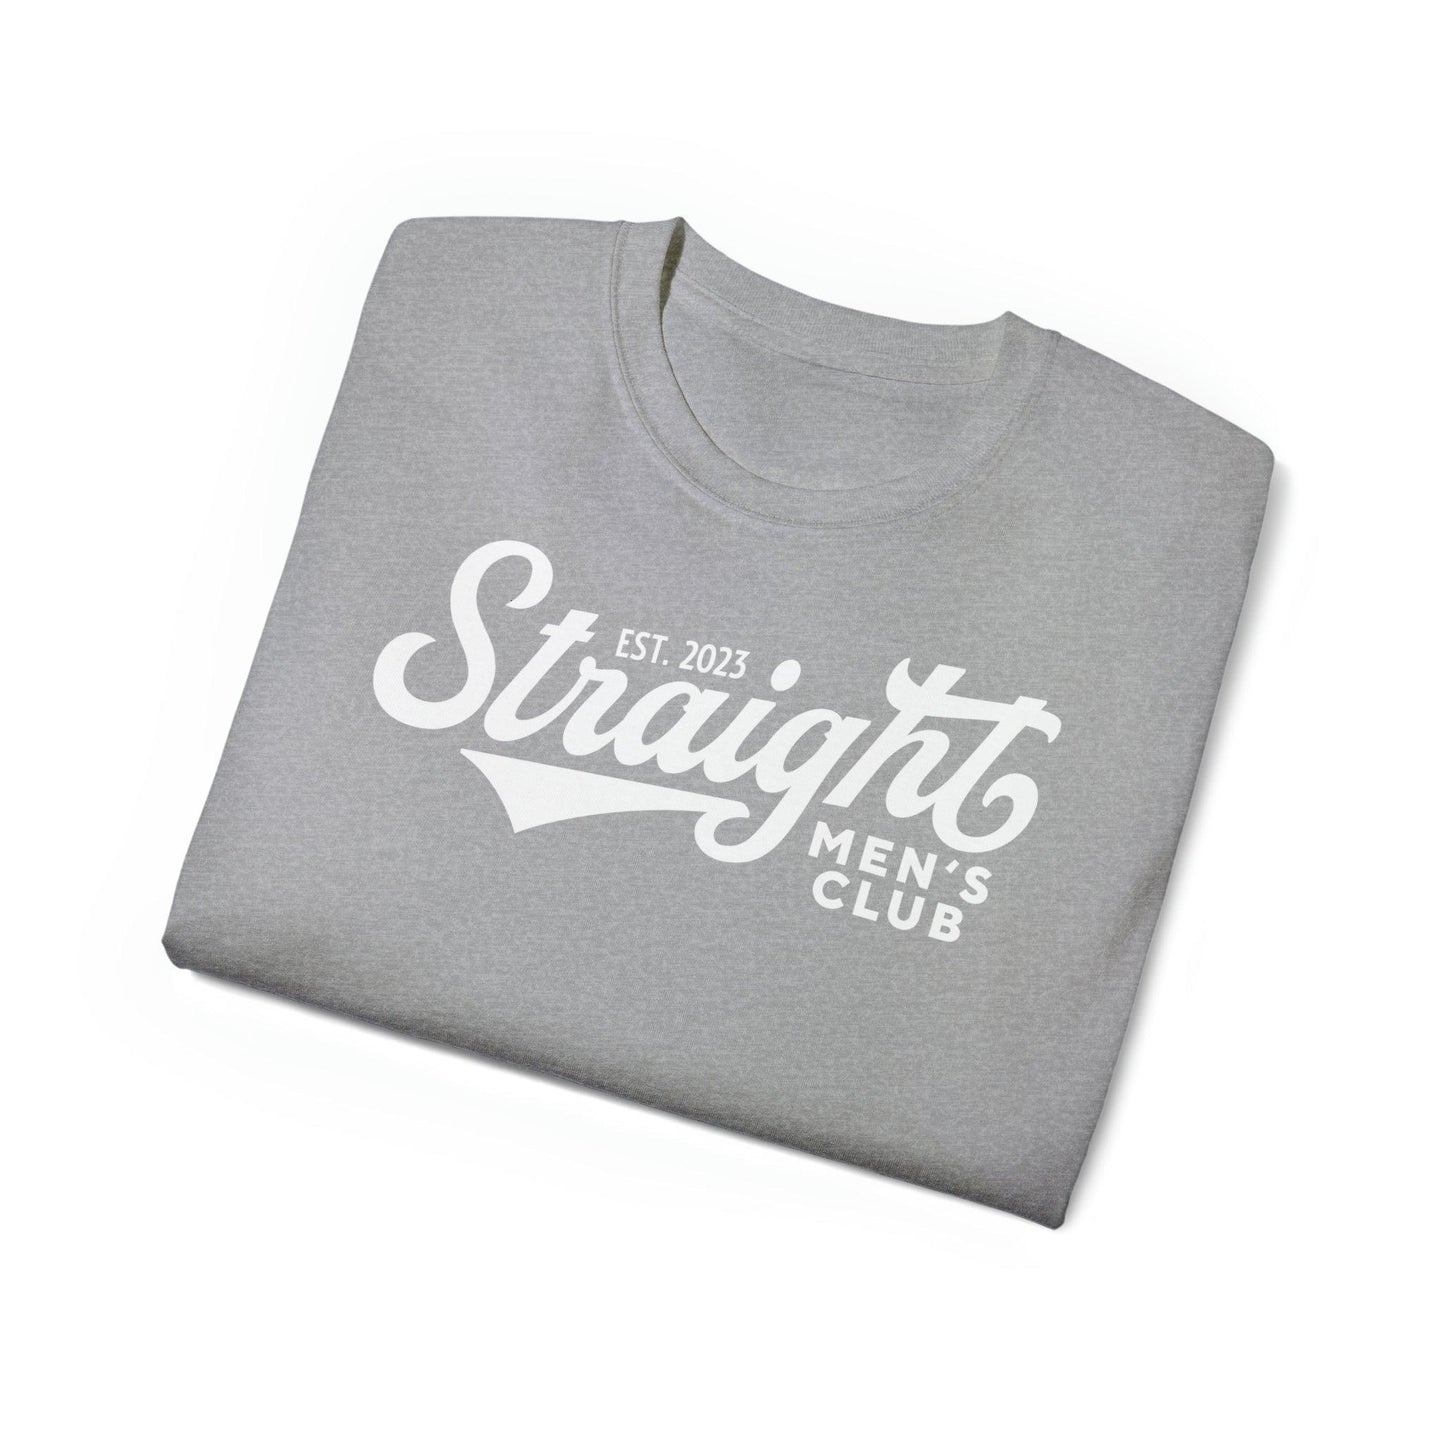 Basic Logo Tee - Straight Men's Club - Straight Men's Club